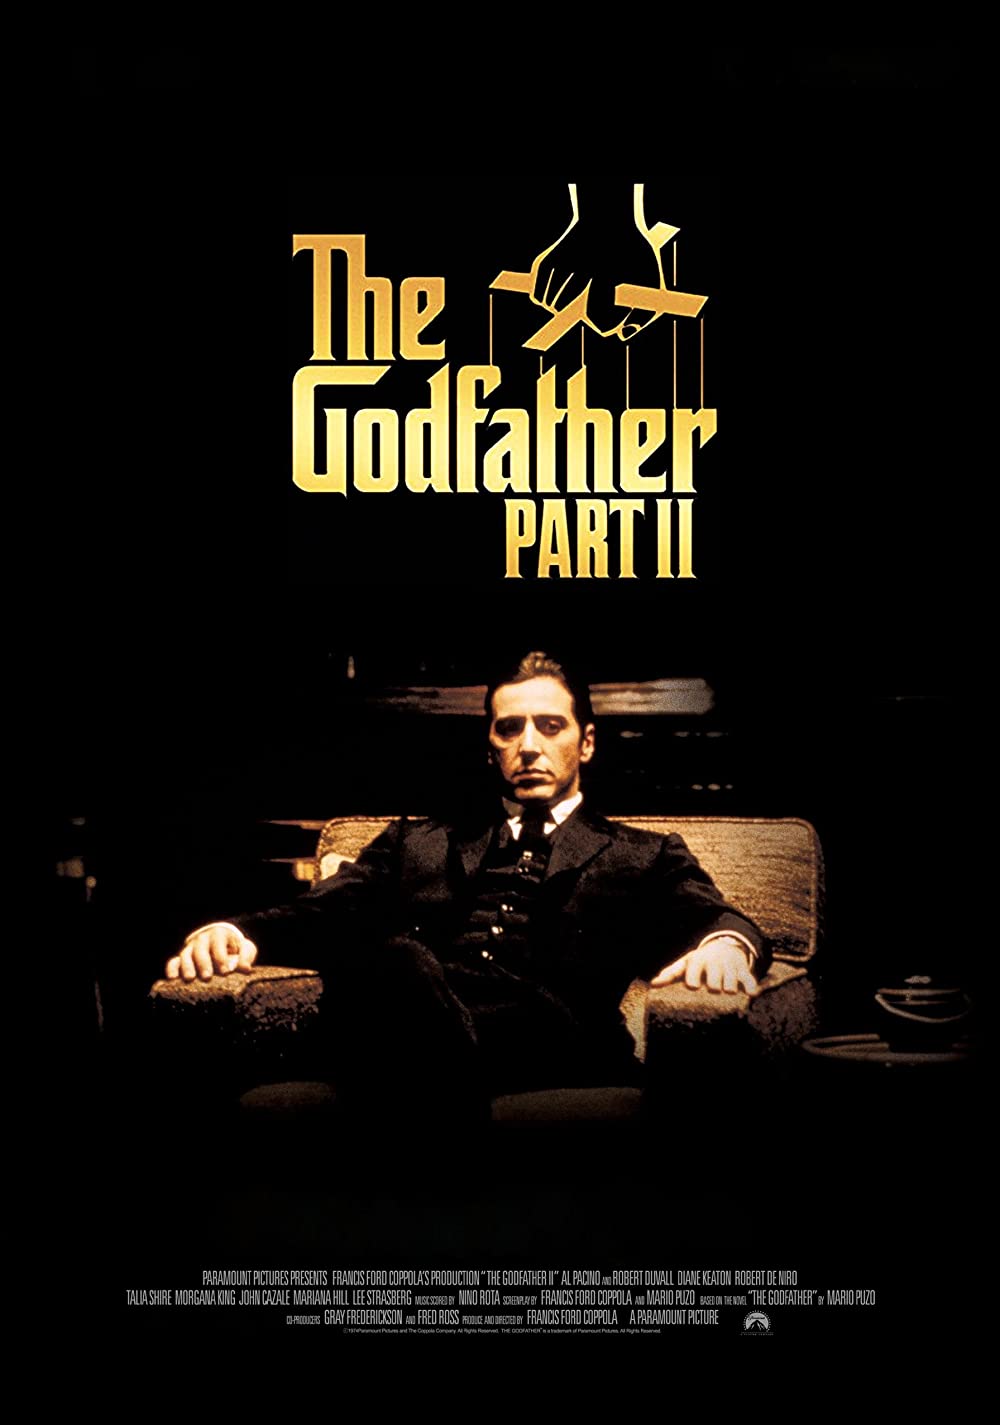 The Godfather Part II (1974) Best Italian Mafia Movies to Add in Your Watchlist